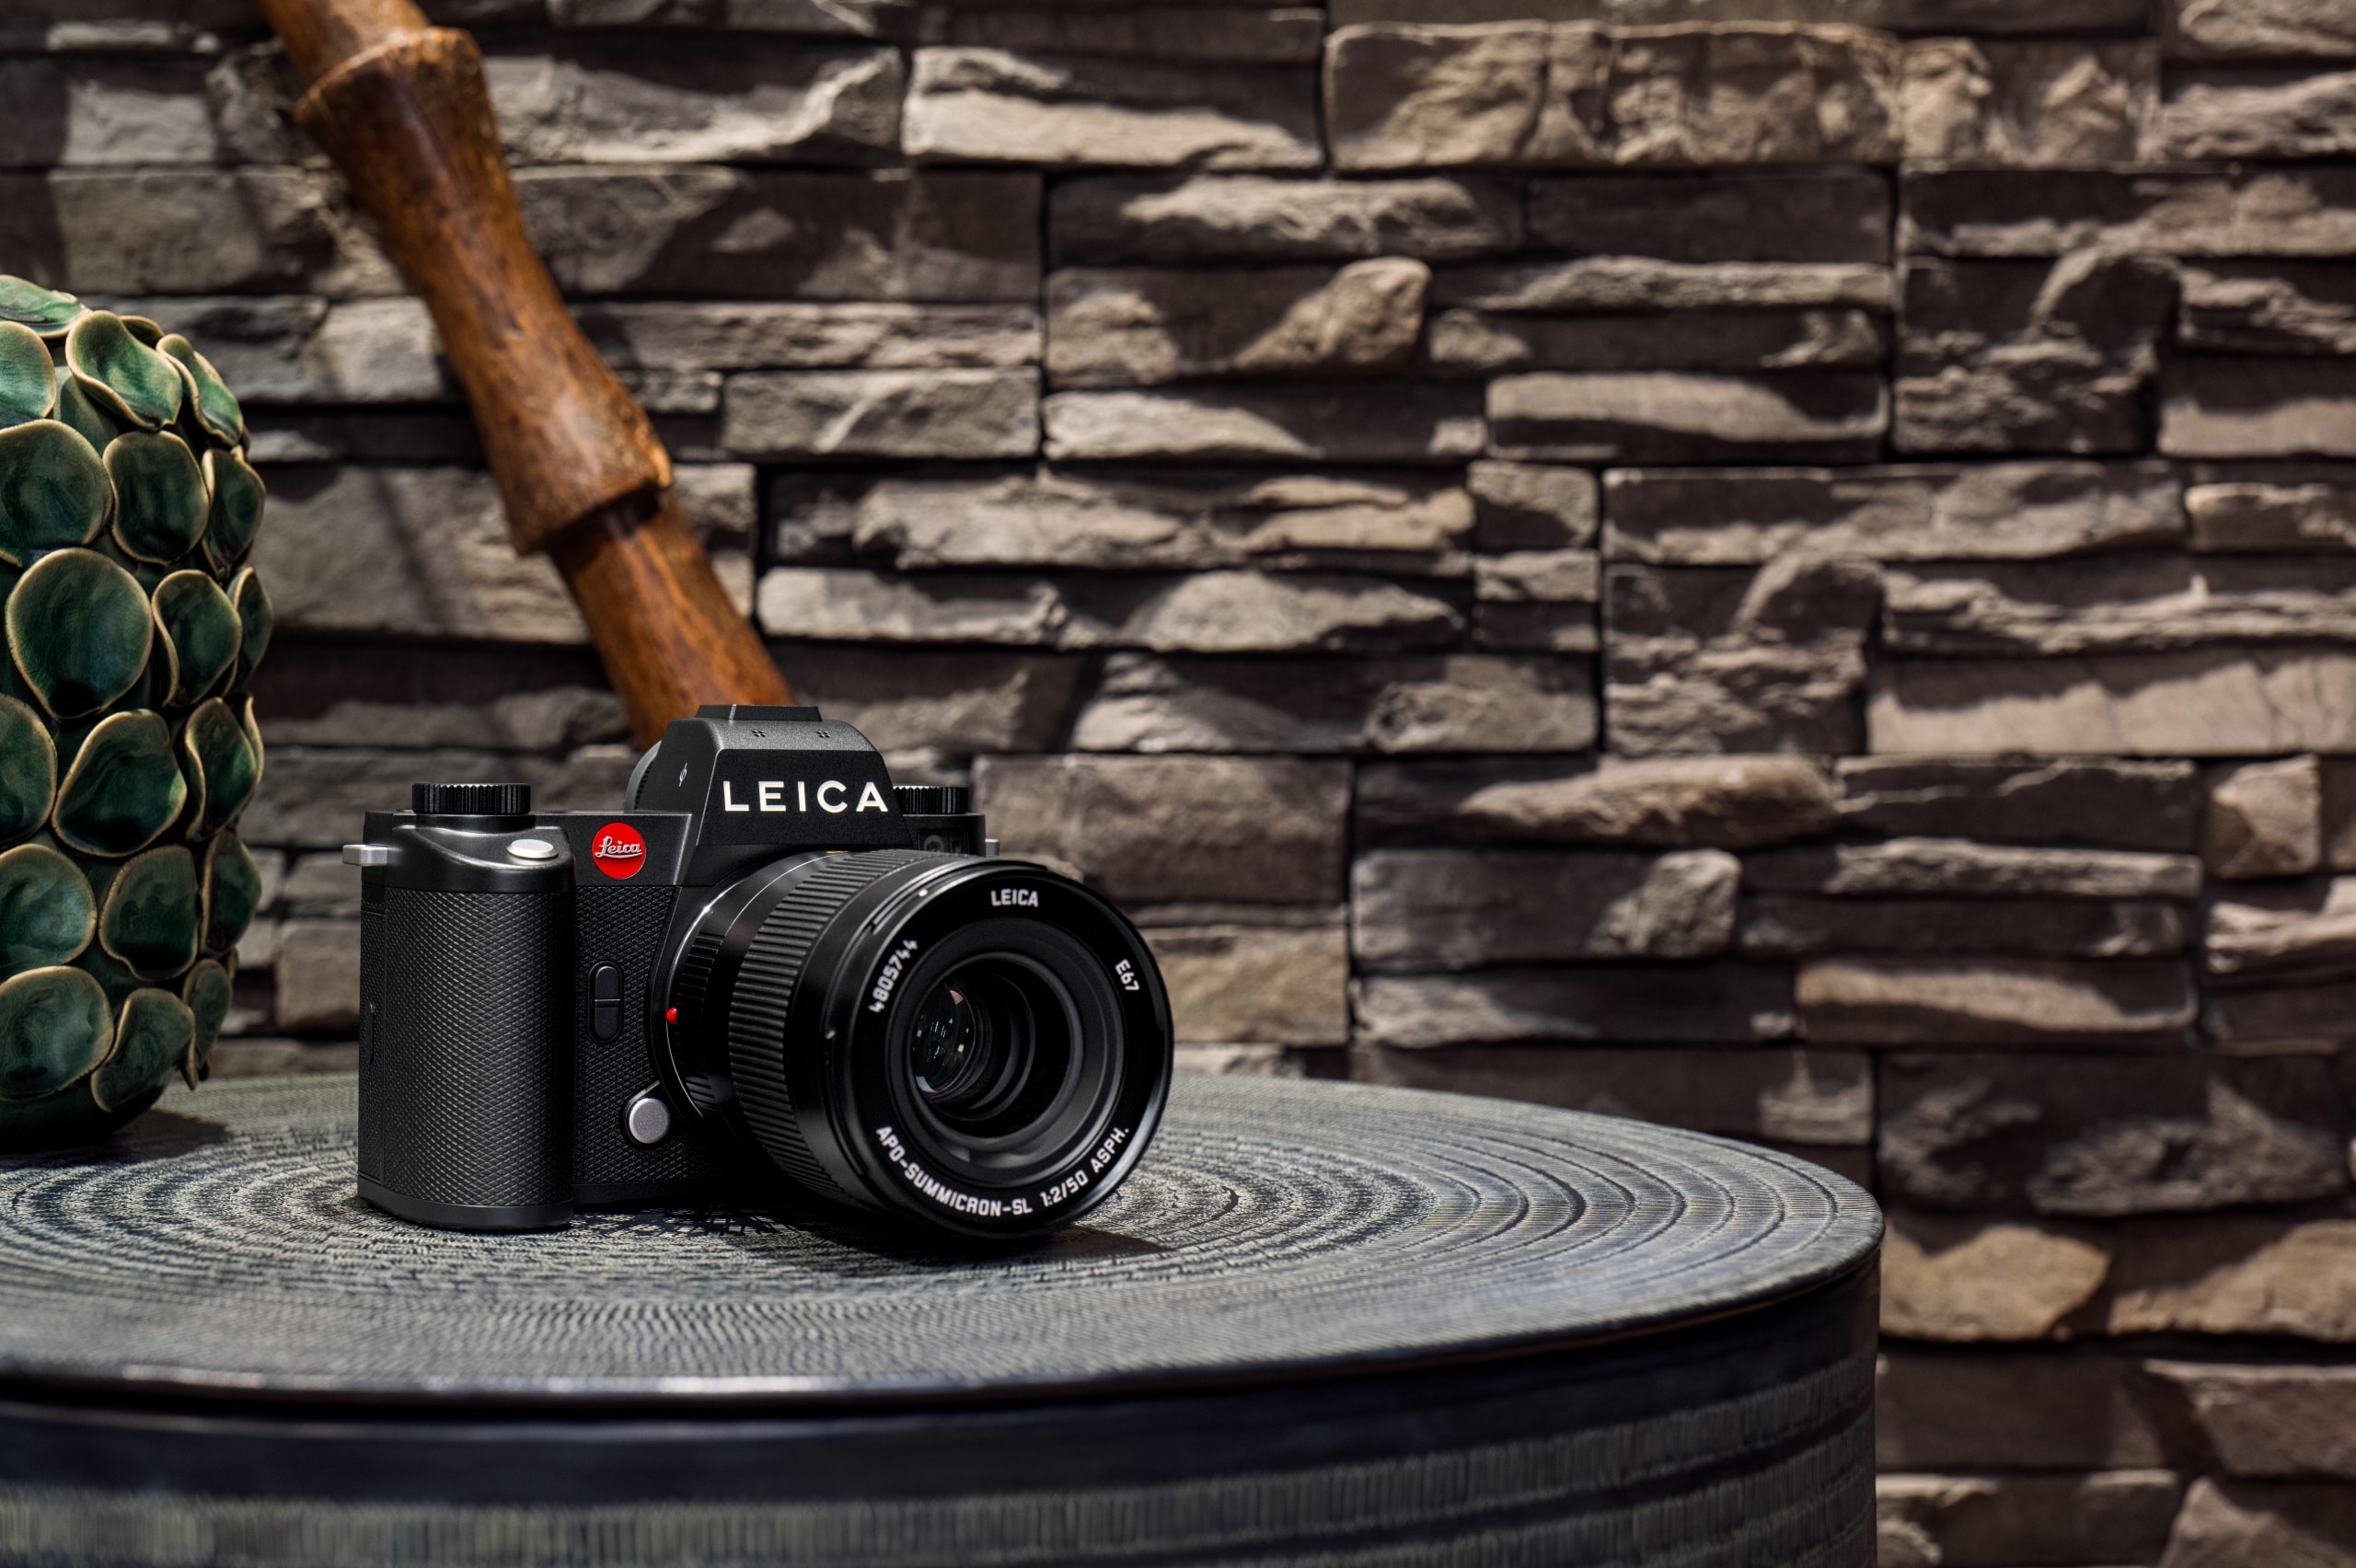 Leica 全新全画幅無反相機 SL3 正式登場